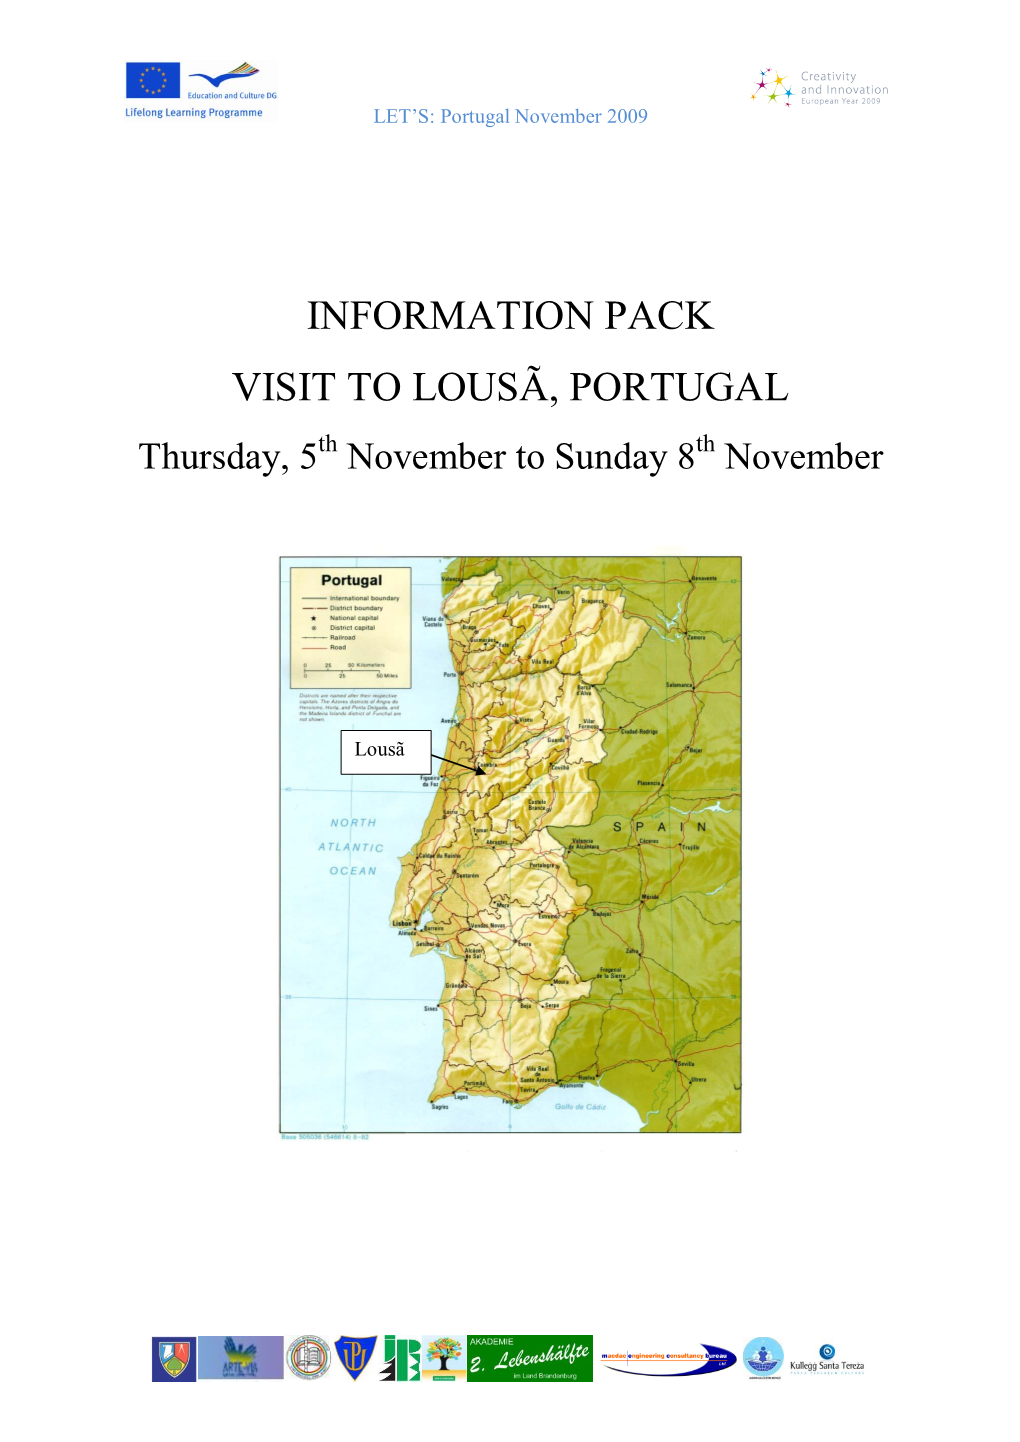 INFORMATION PACK VISIT to LOUSÃ, PORTUGAL Thursday, 5Th November to Sunday 8Th November